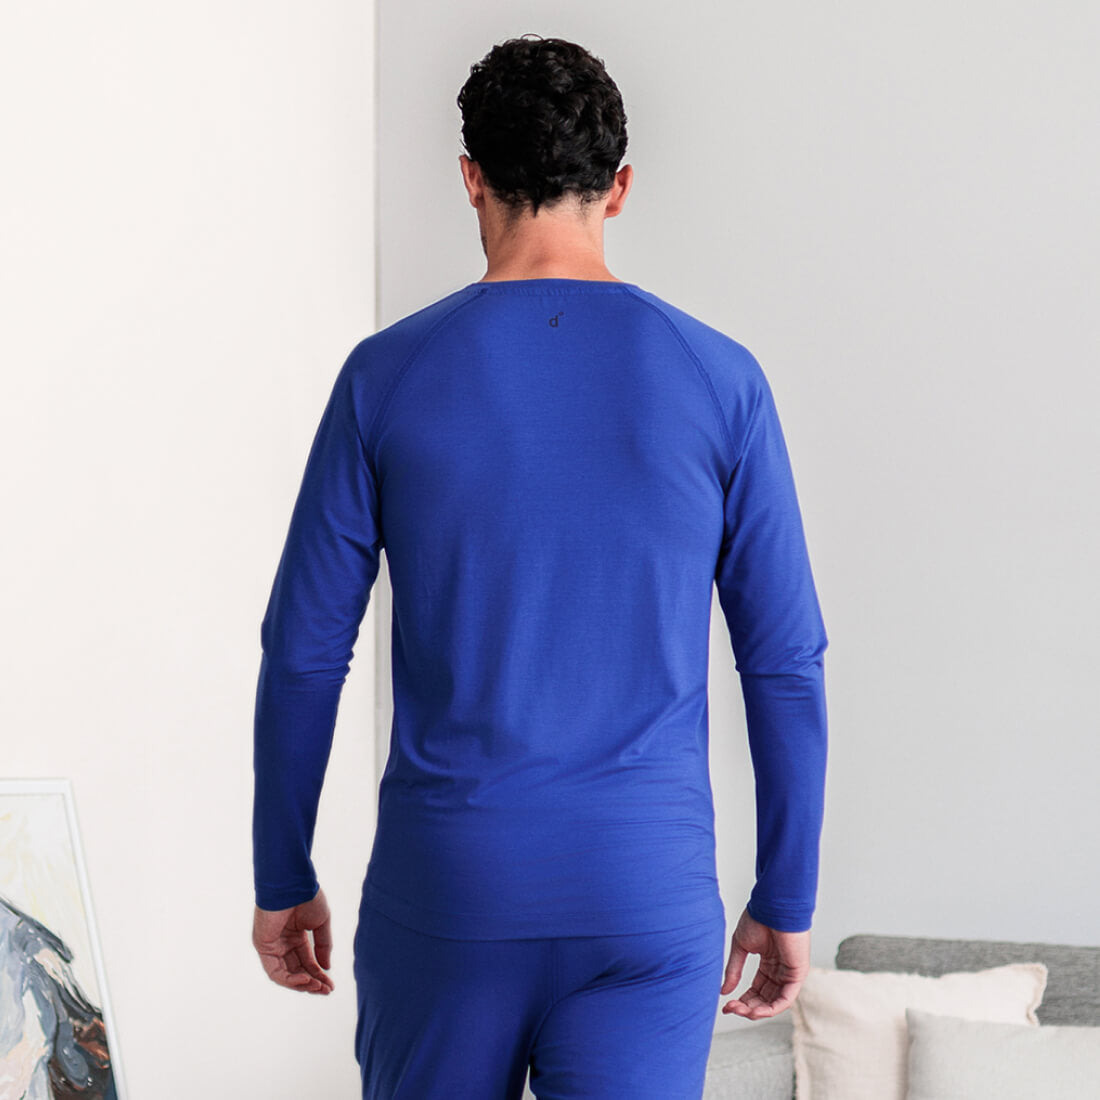 Recovery pajama long sleeve || Azure blue